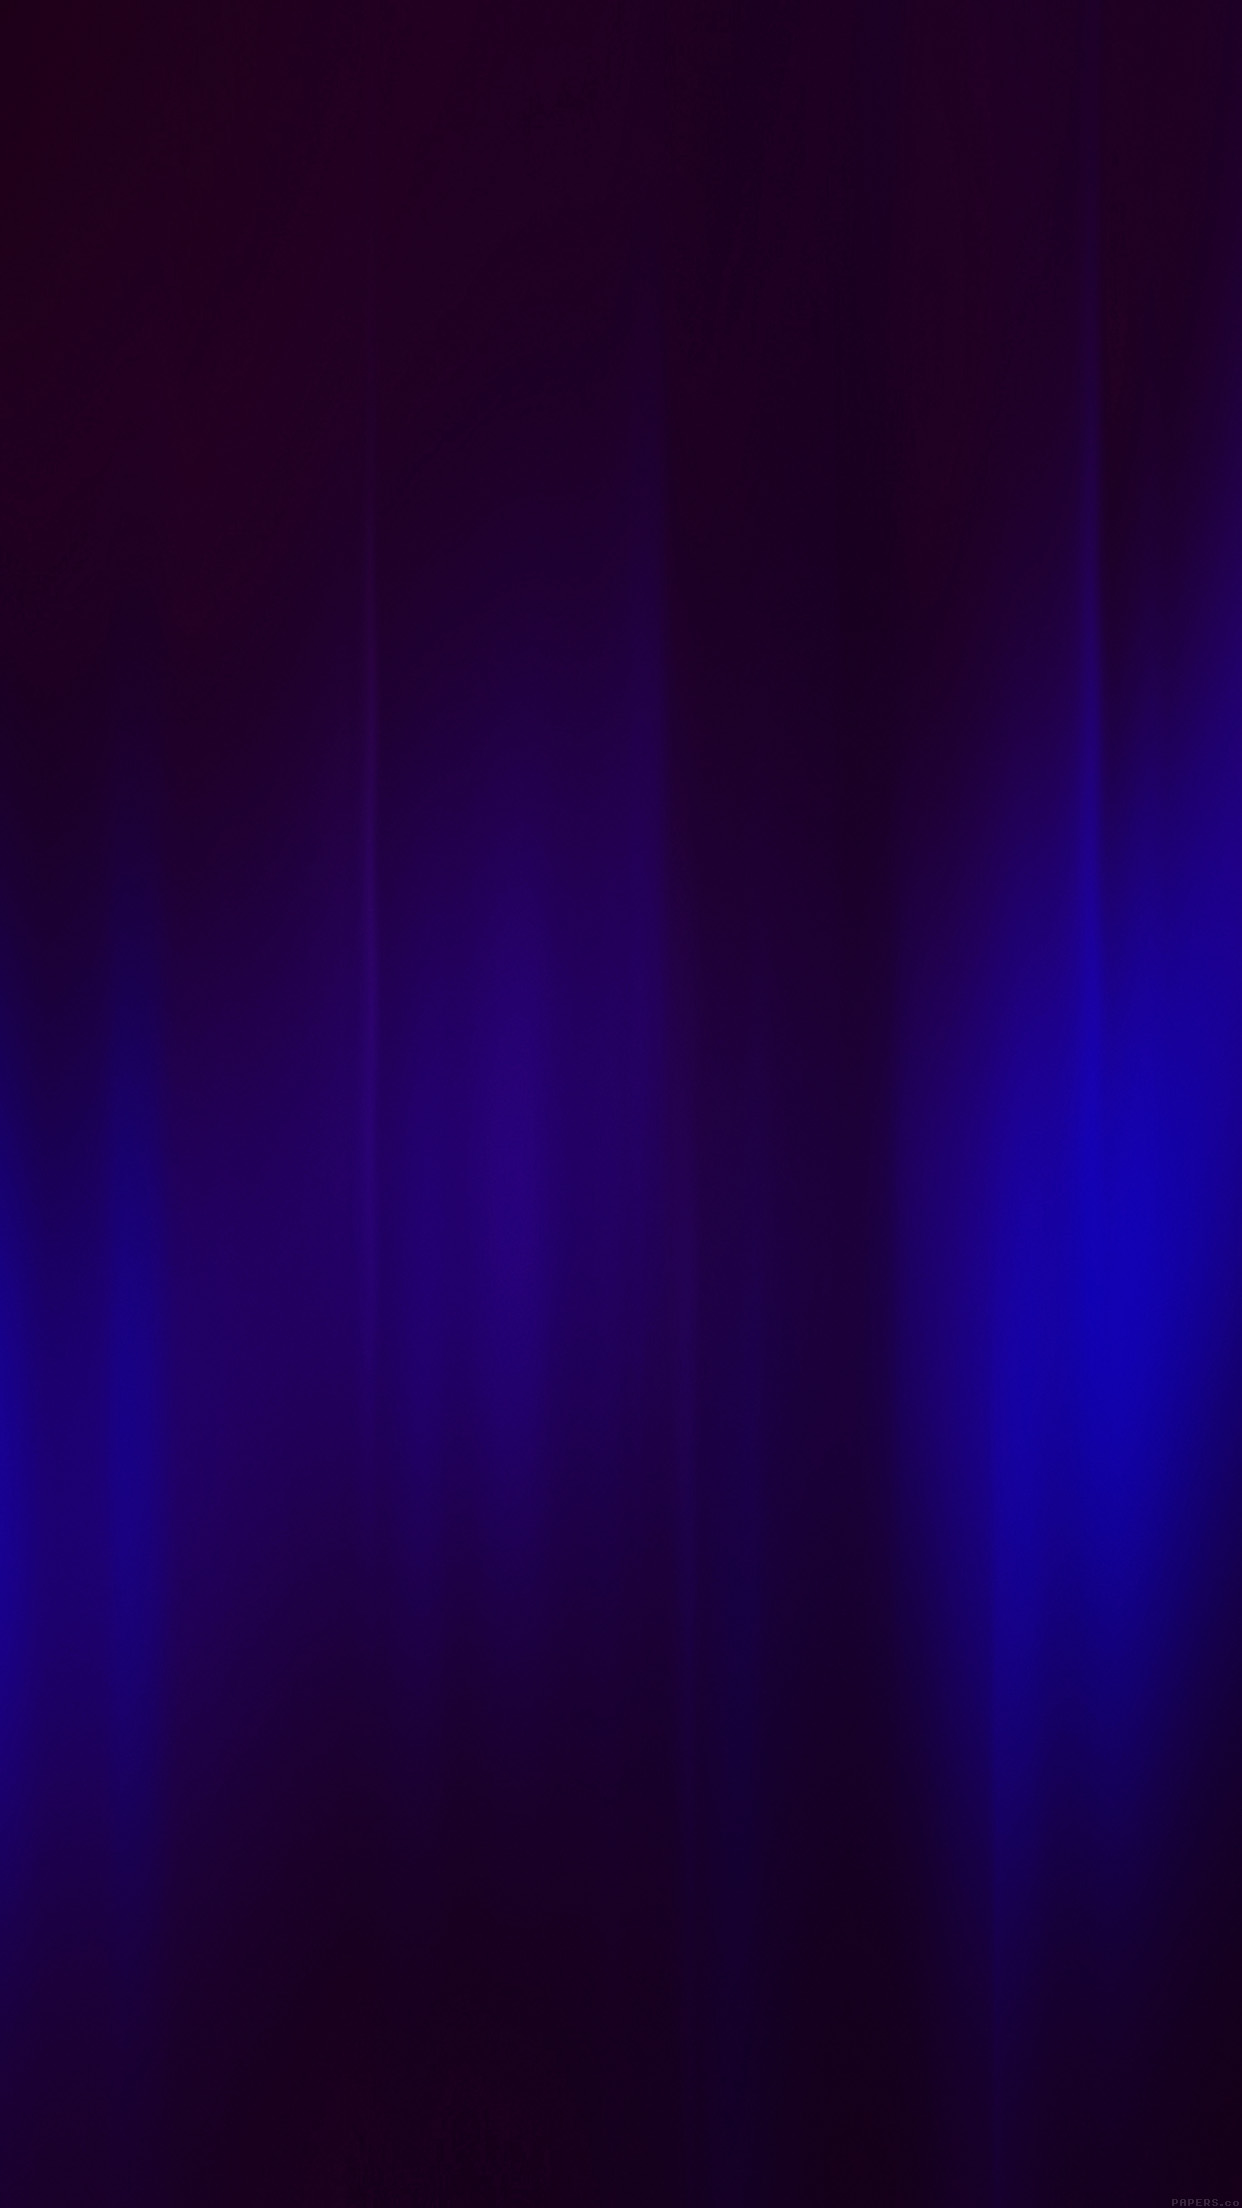 dark blue pattern wallpaper,blue,violet,purple,black,electric blue